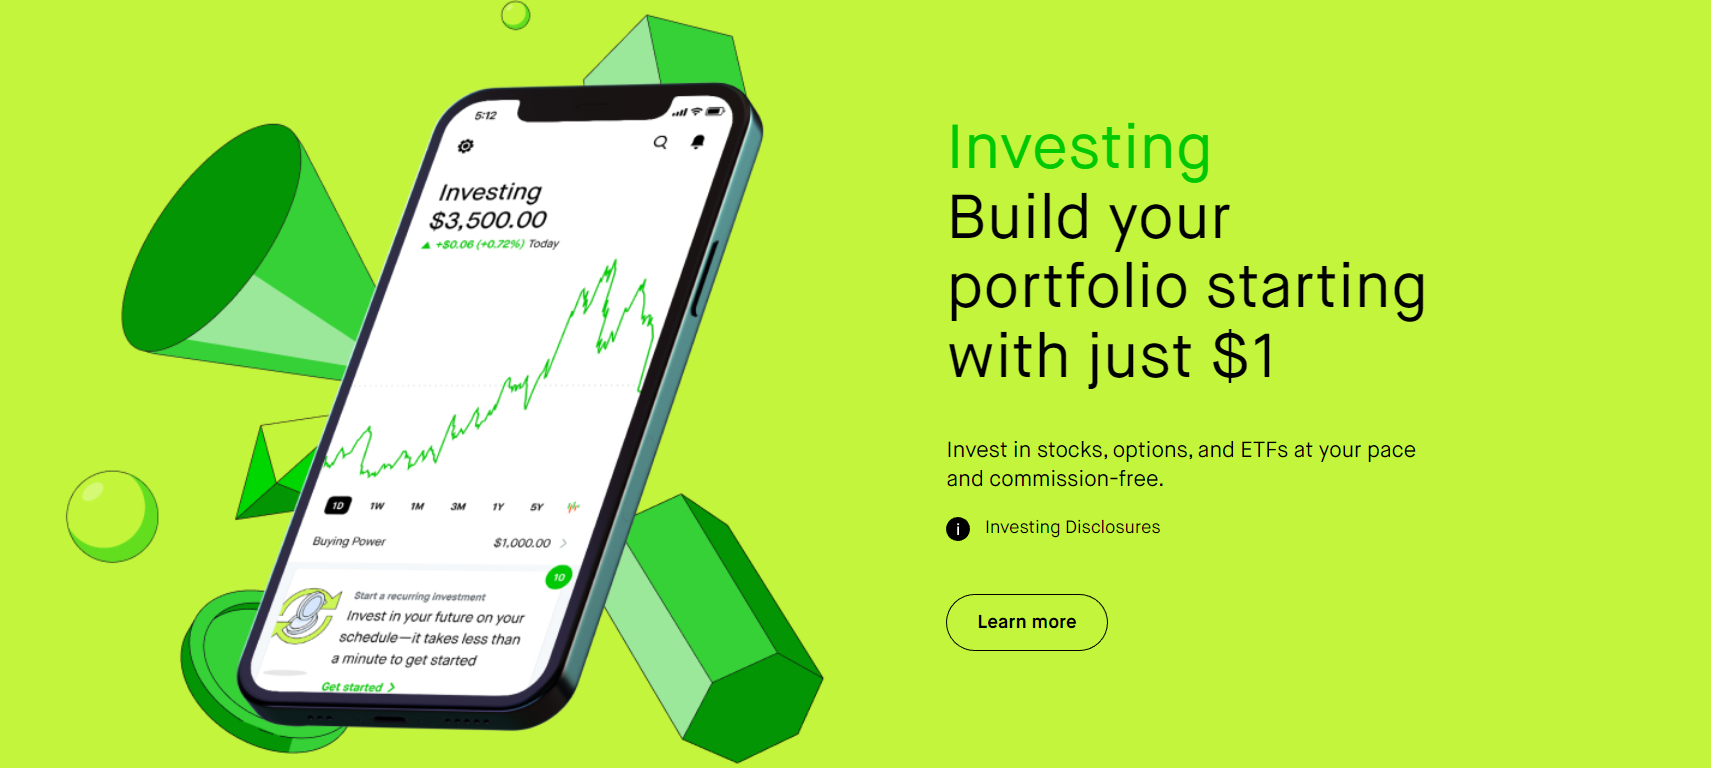 personal finance app development like Robinhood allows investing